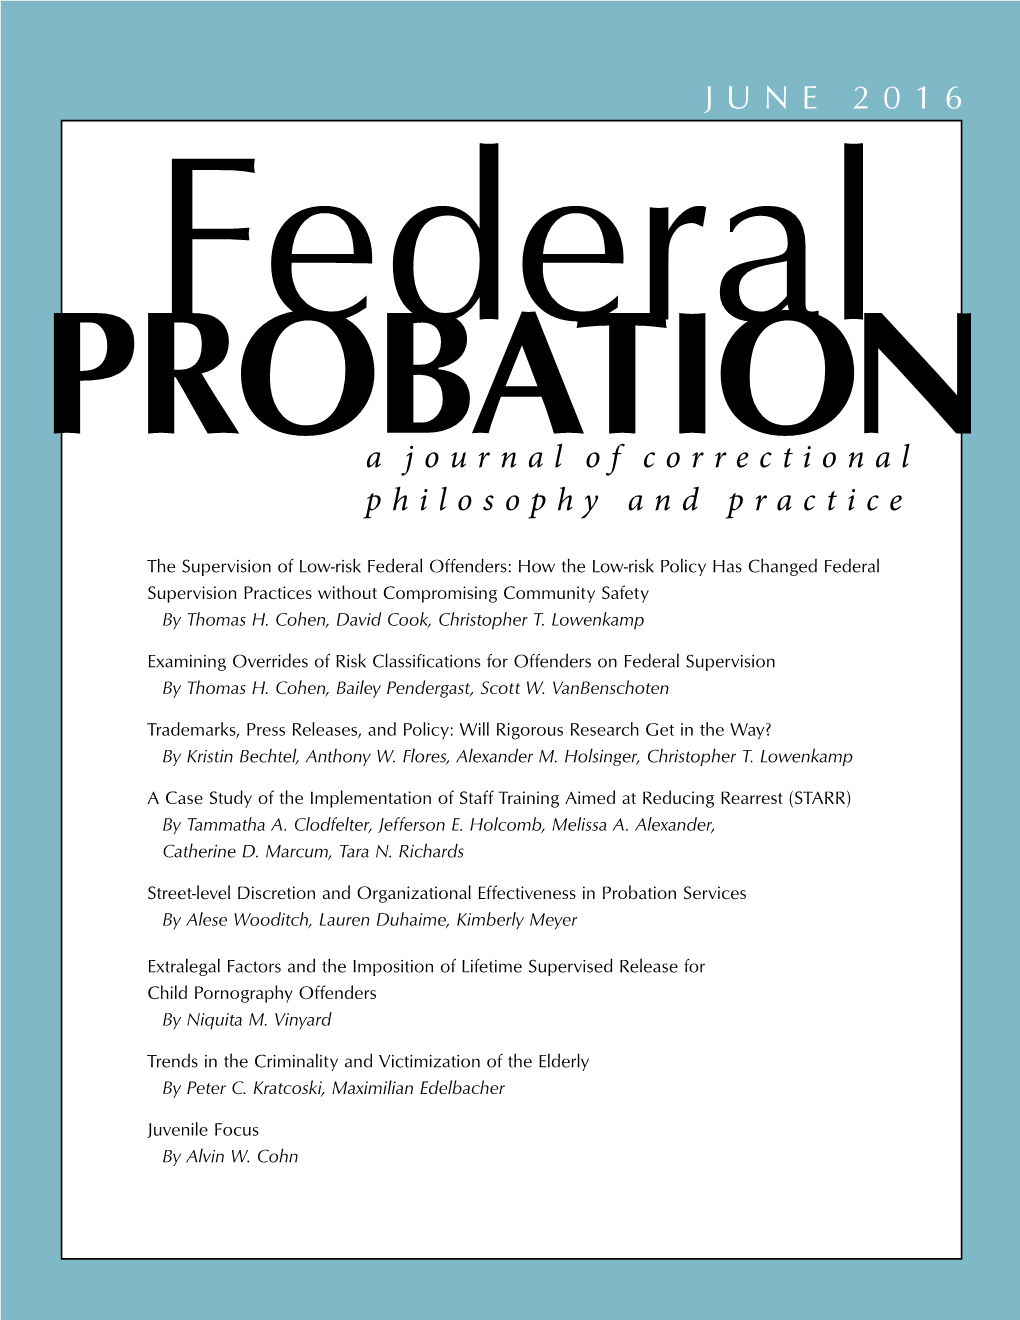 Federal Probation Journal